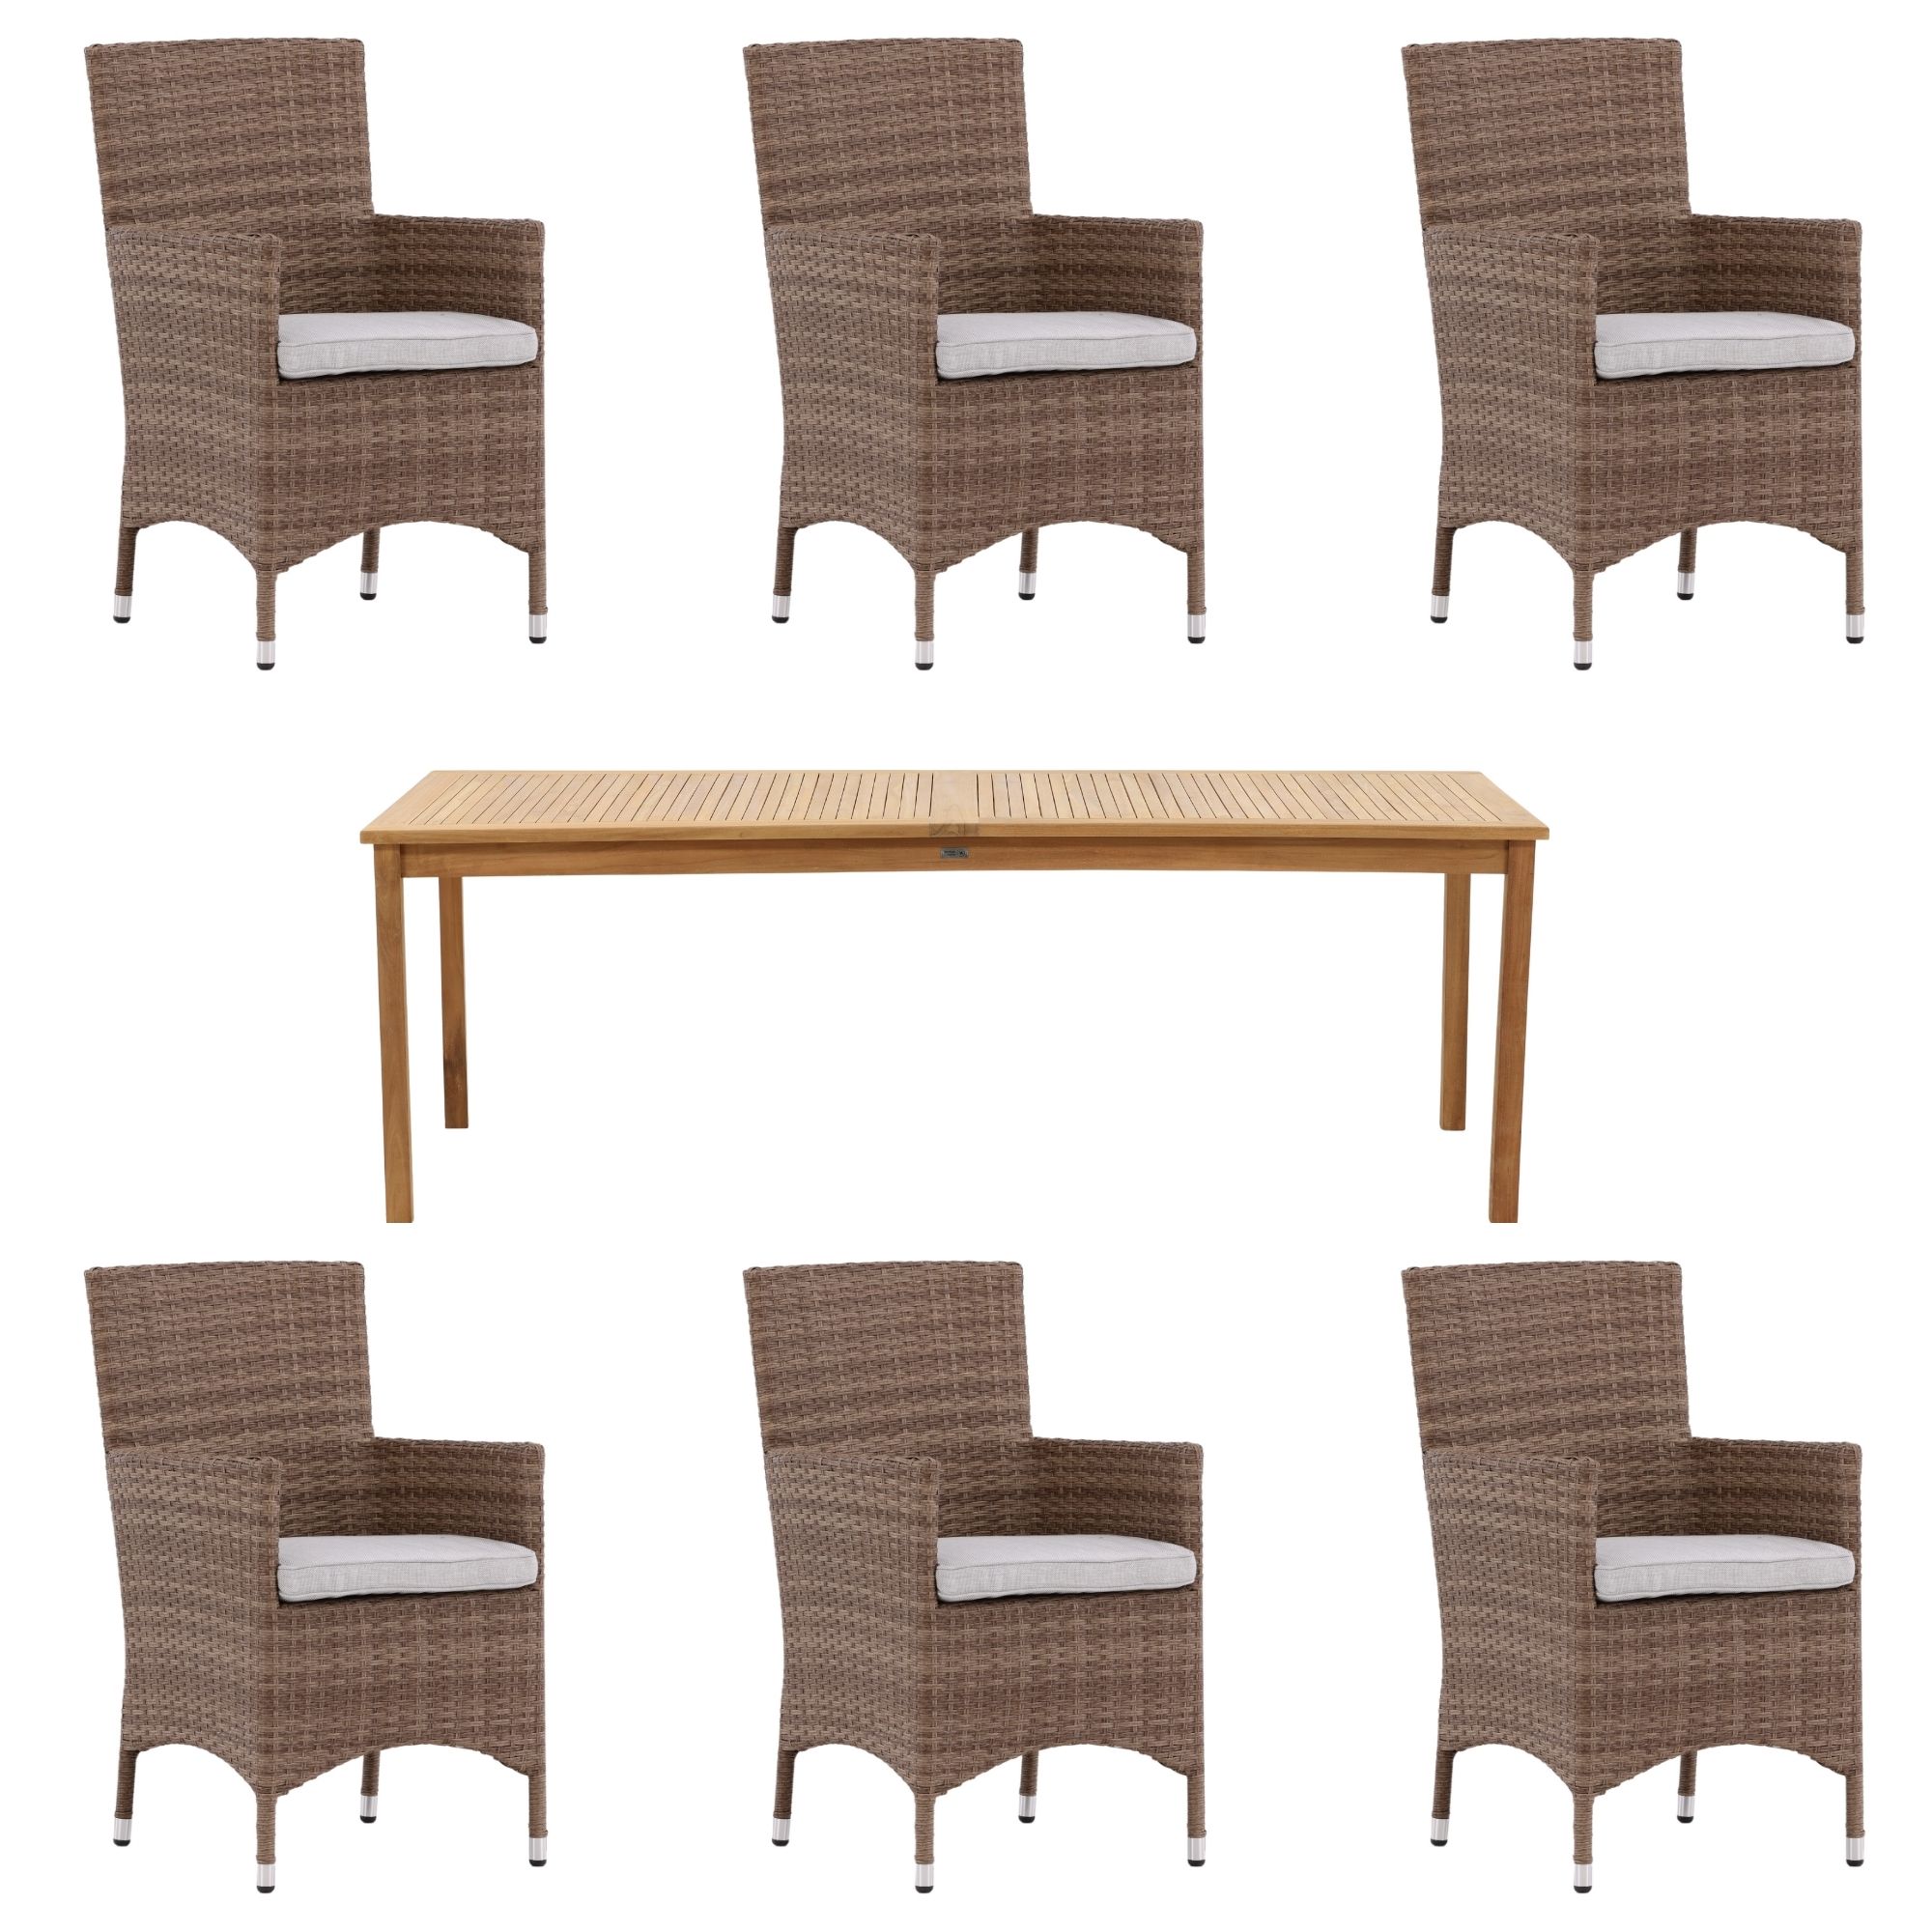 Venture Design - Kenya Garden Table 220x100x76 cm - Teak with 6 pcs. Malin Garden Chairs with Cushion - Nature - Bundle